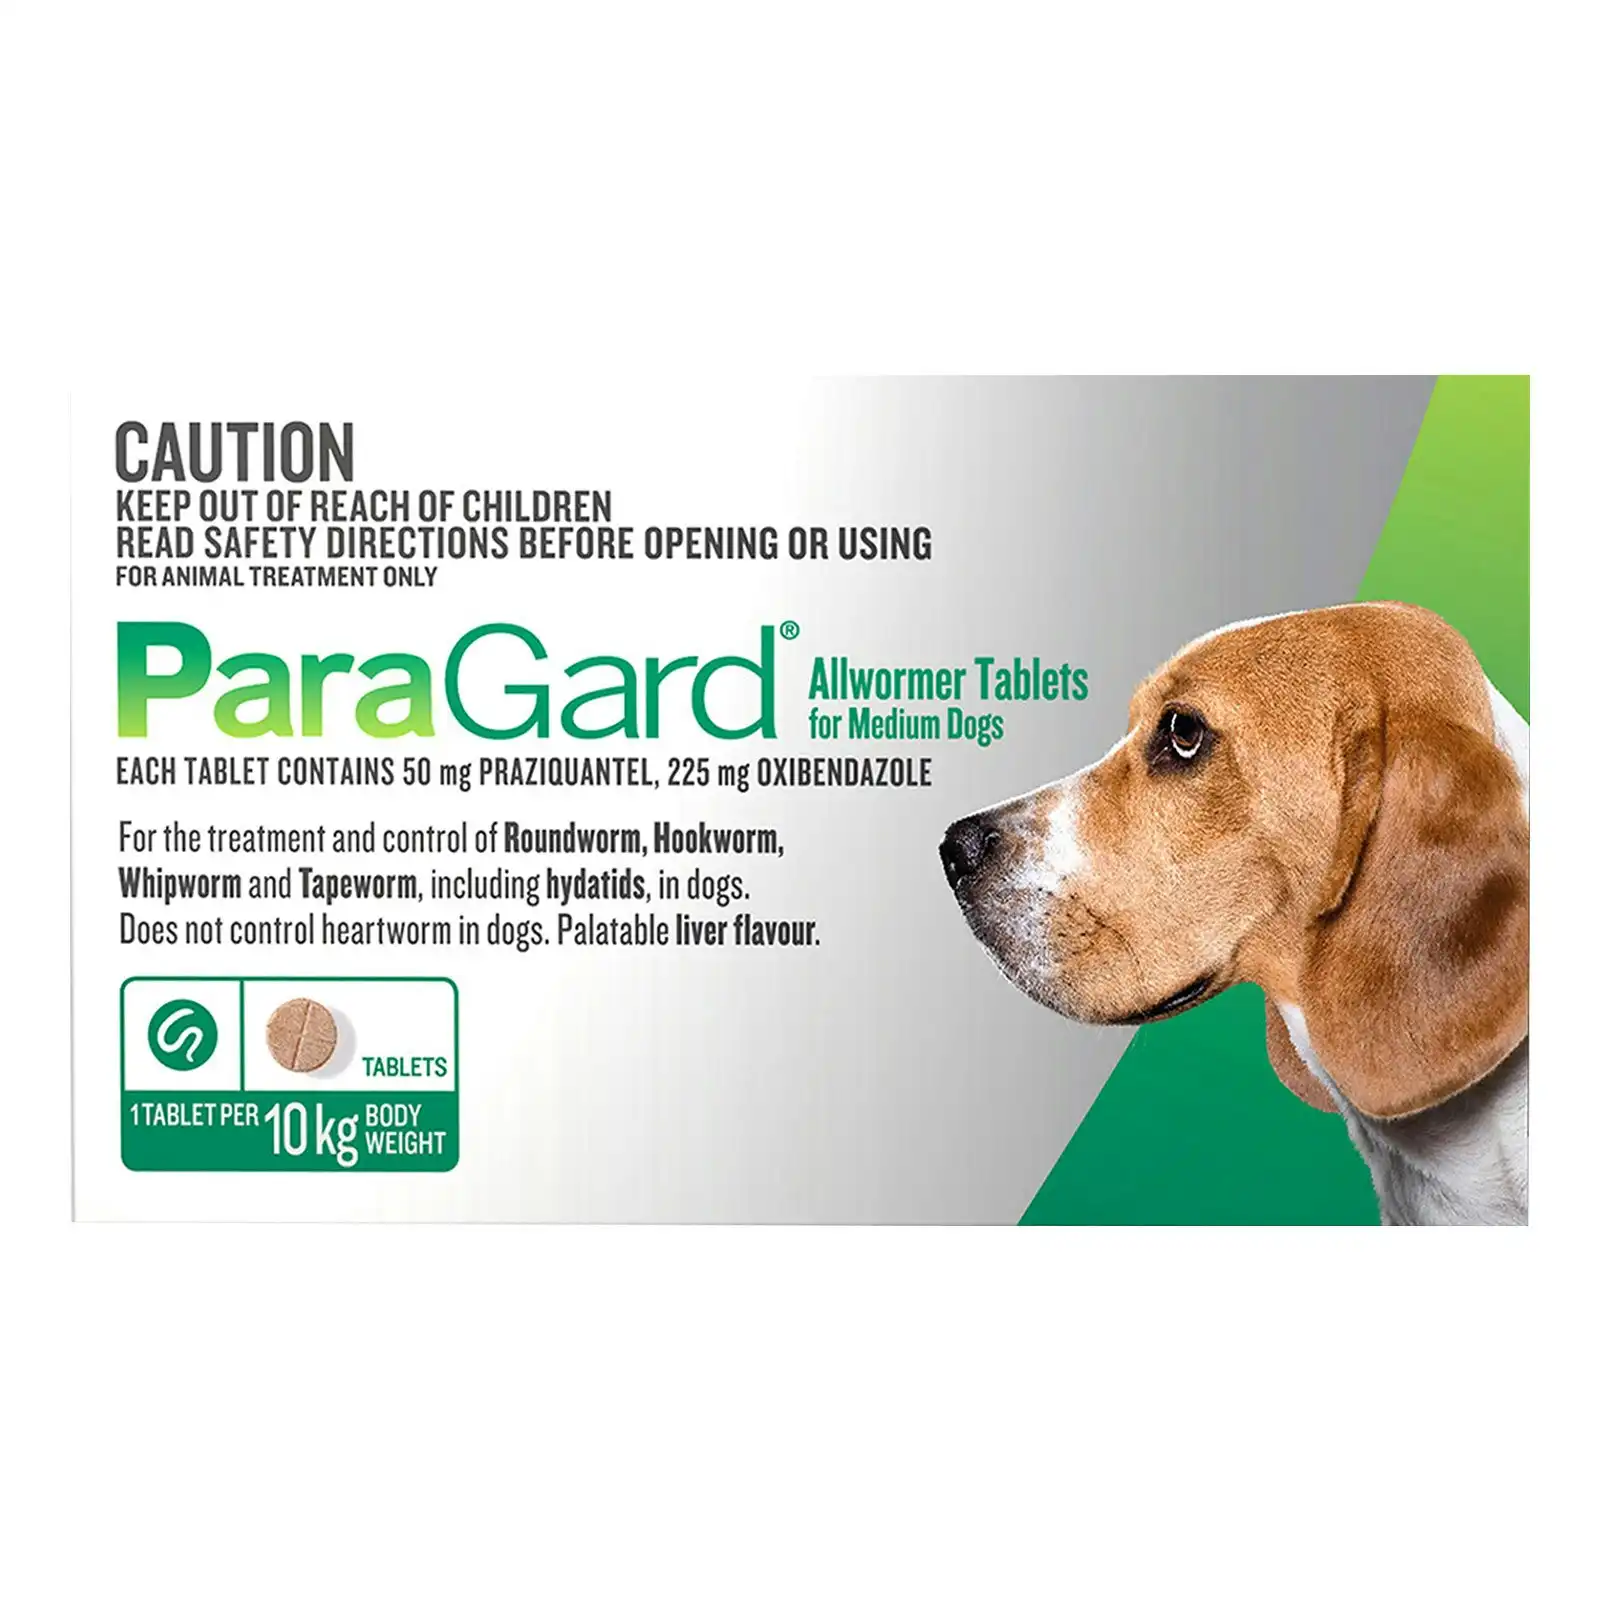 Paragard Allwormer Tablets For Medium Dogs 10 Kg 4 Tablets GREEN